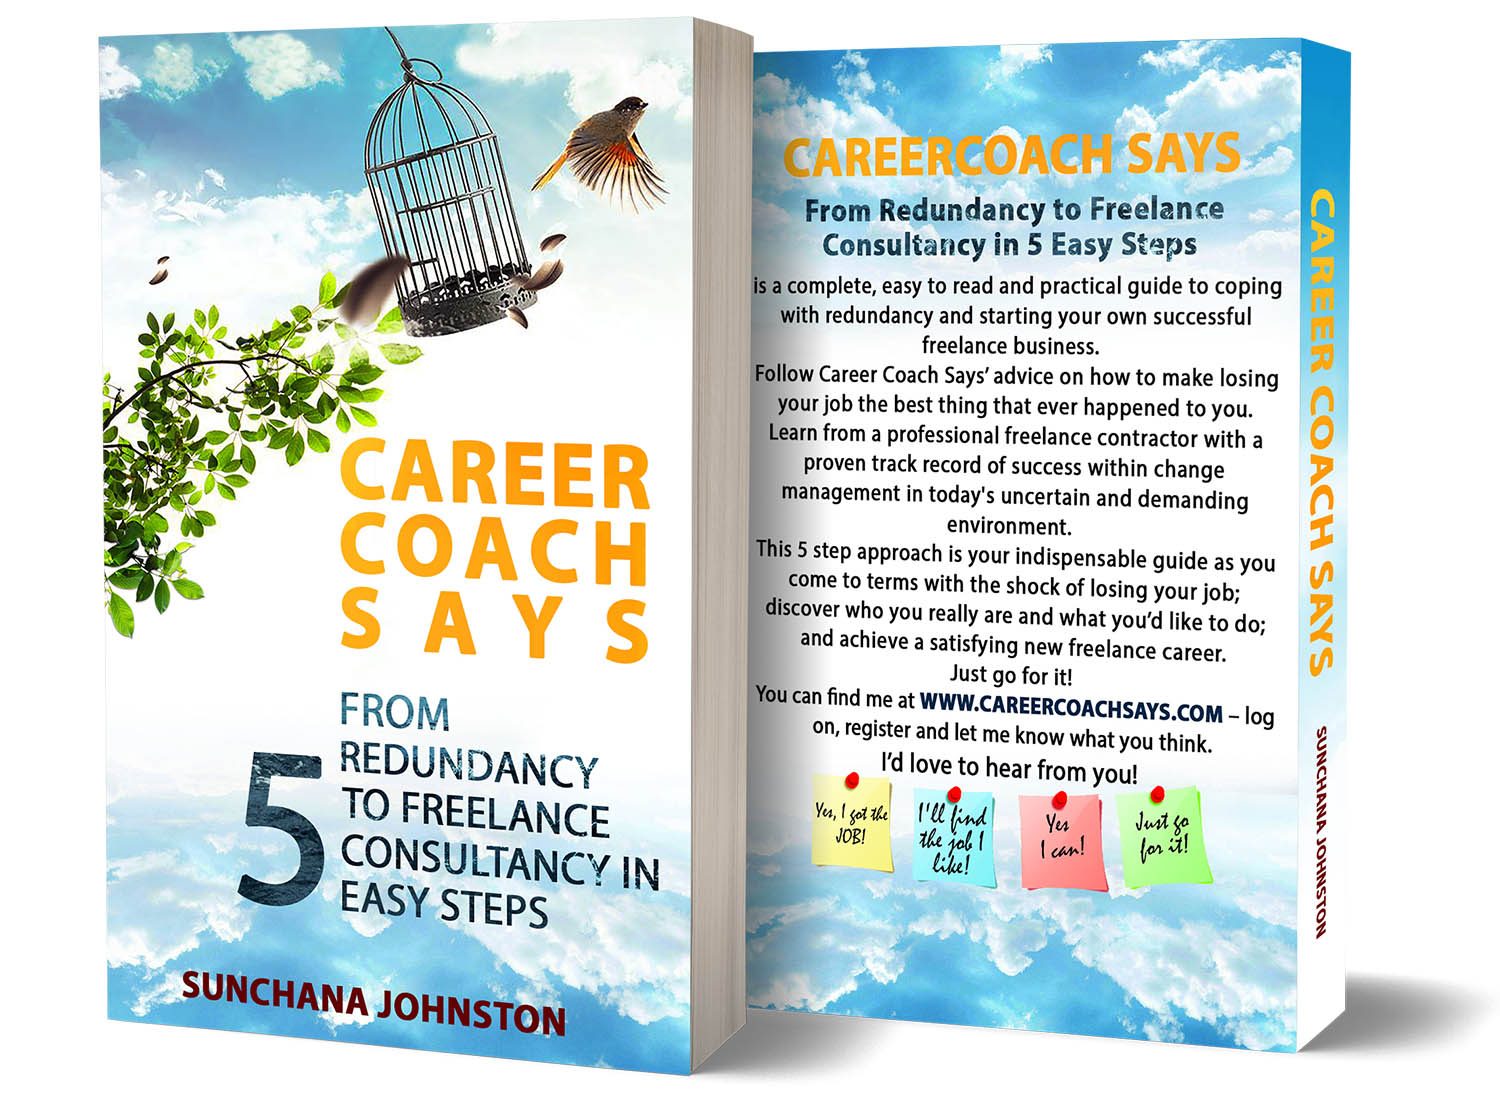 mrismailben-portfolio-career-coach-says-paperback-bookcoverdesign